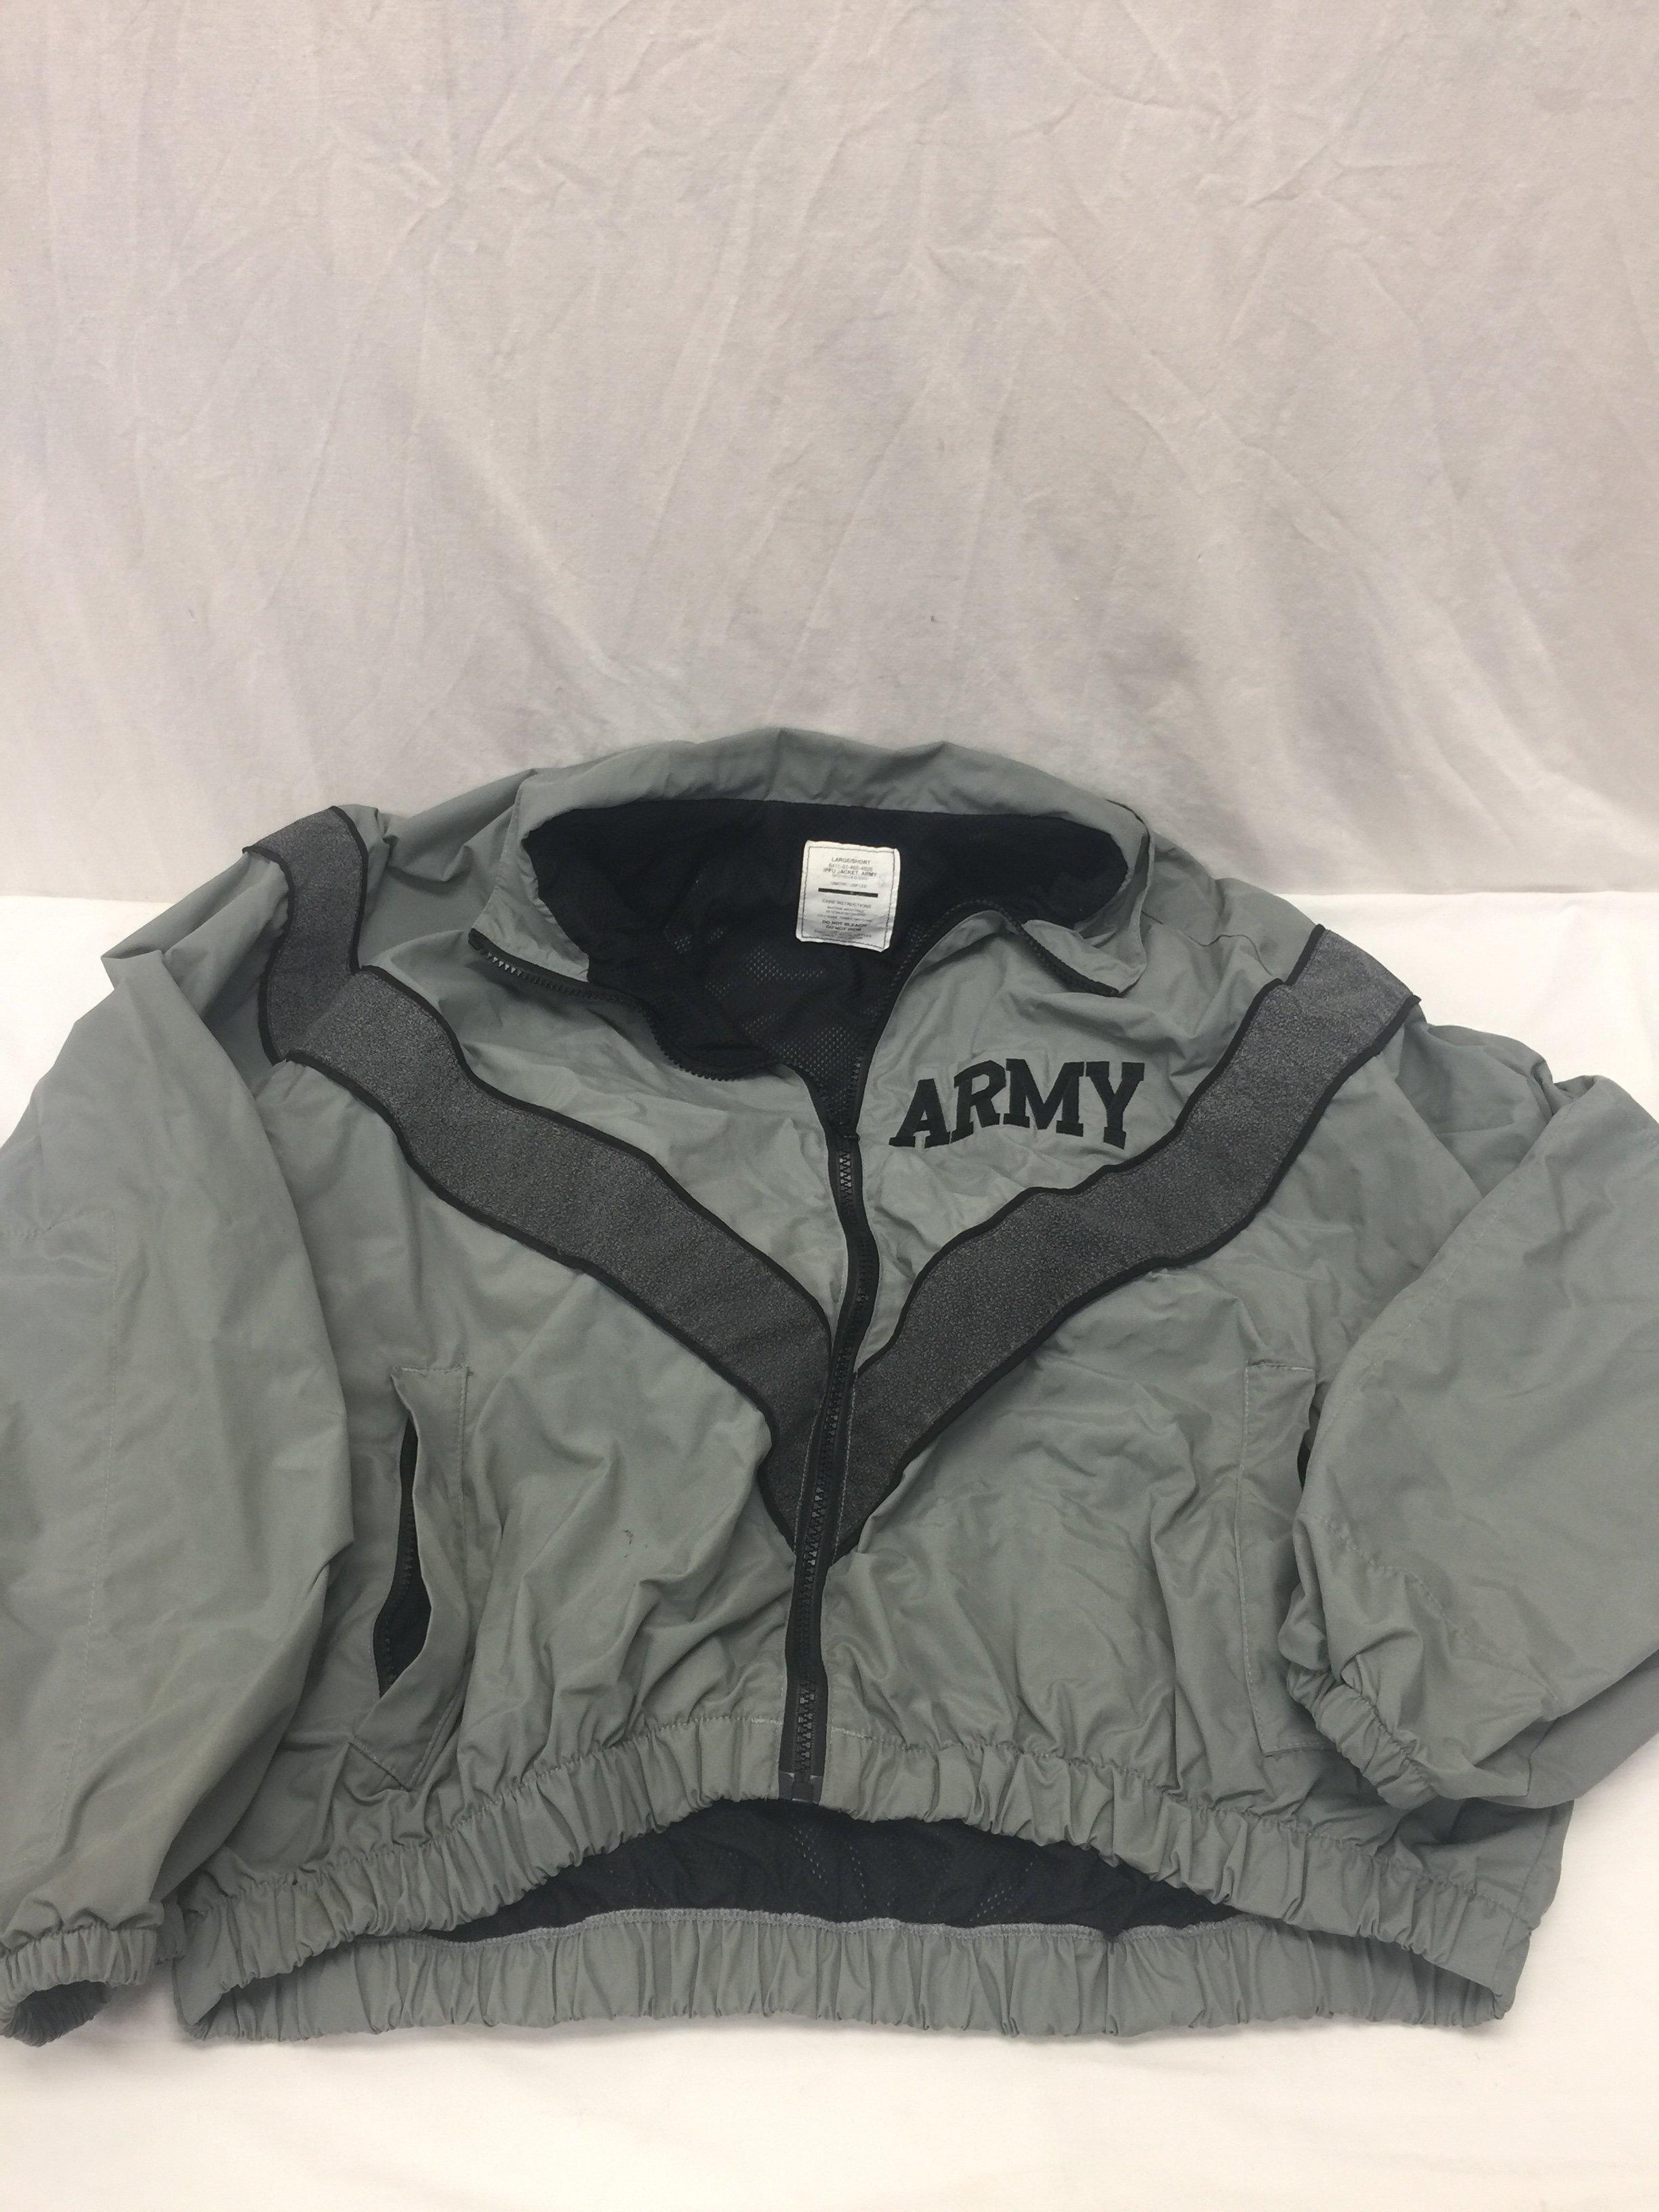 ARMY Light Weight Light Reflective Jacket (Large)